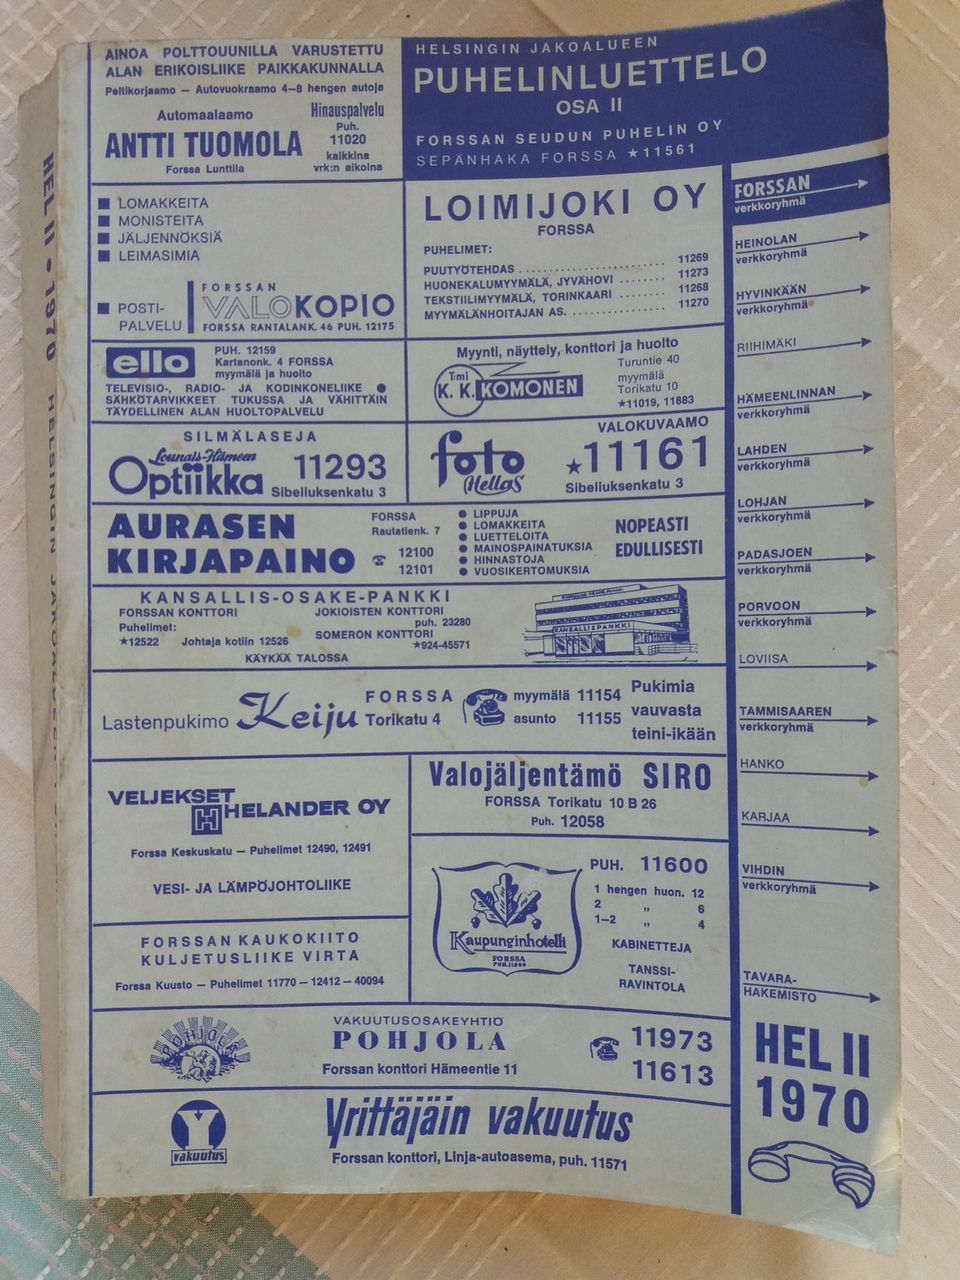 Vanha puhelinluettelo 1970